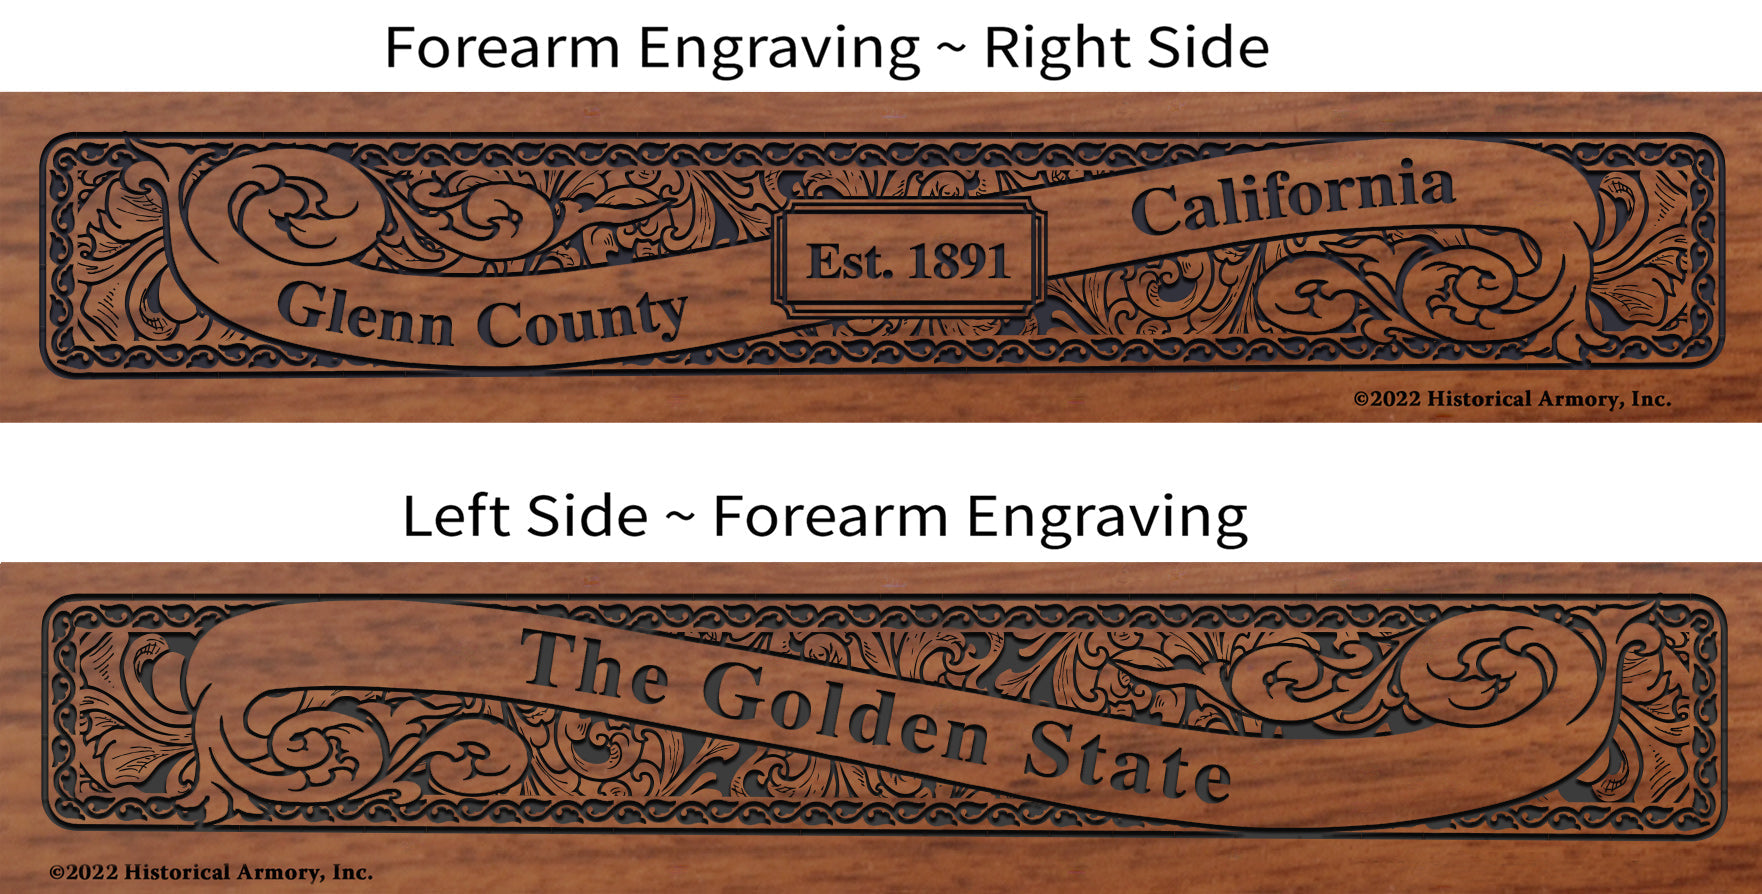 Glenn County California Engraved Rifle Forearm